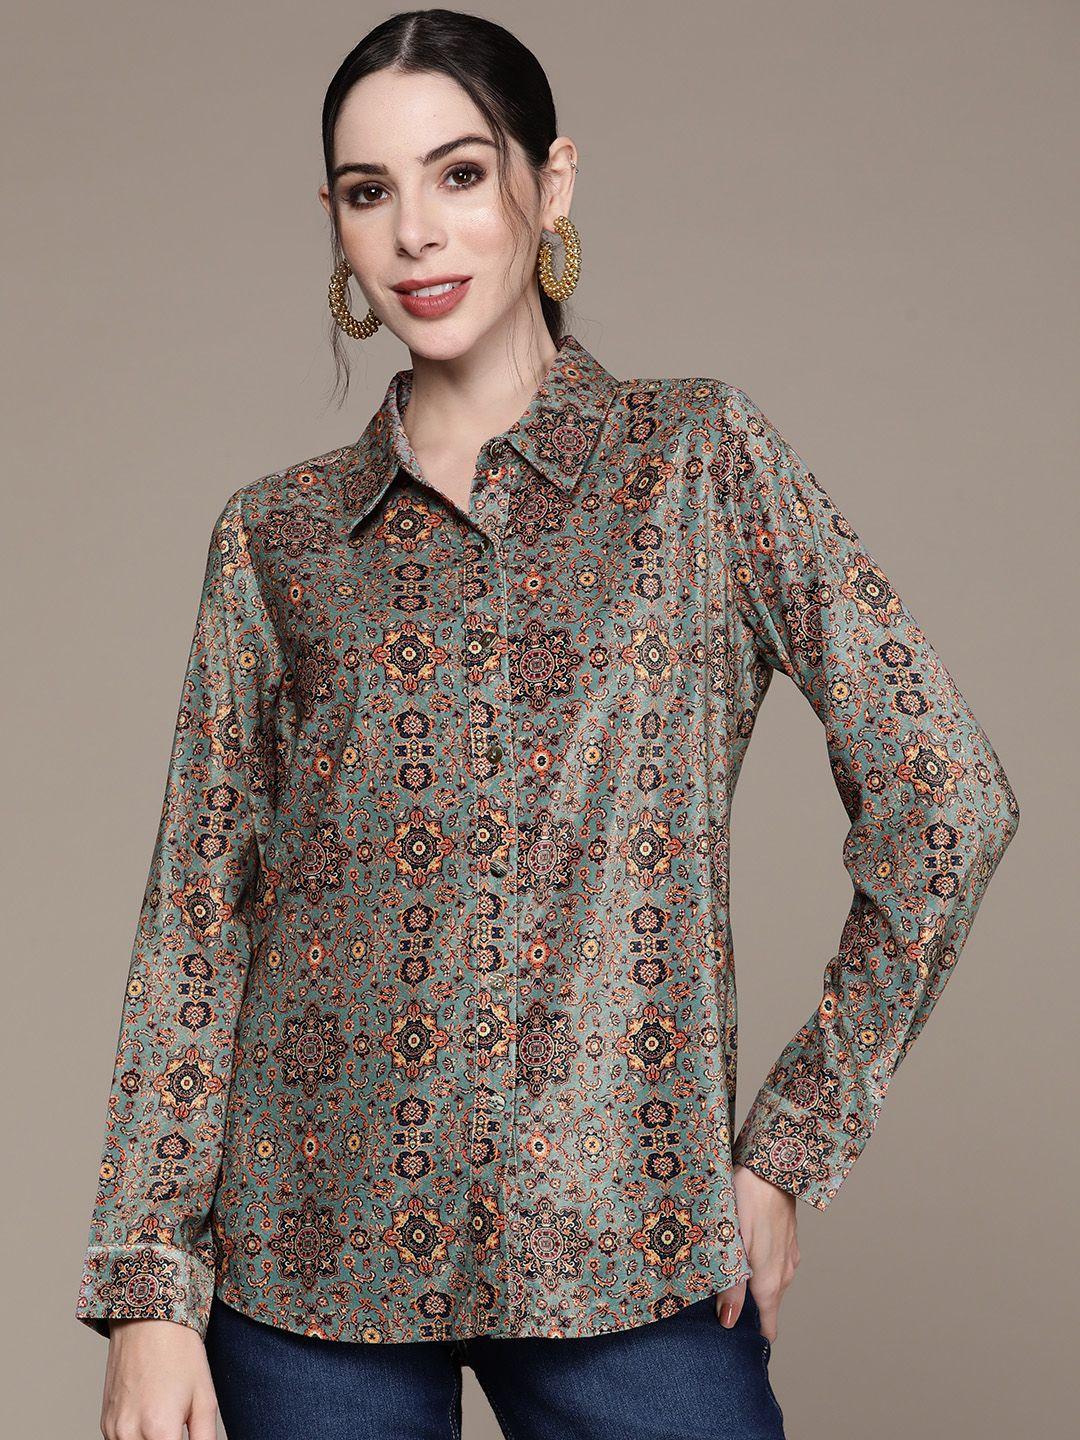 aarke-ritu-kumar-women-relaxed-printed-casual-shirt